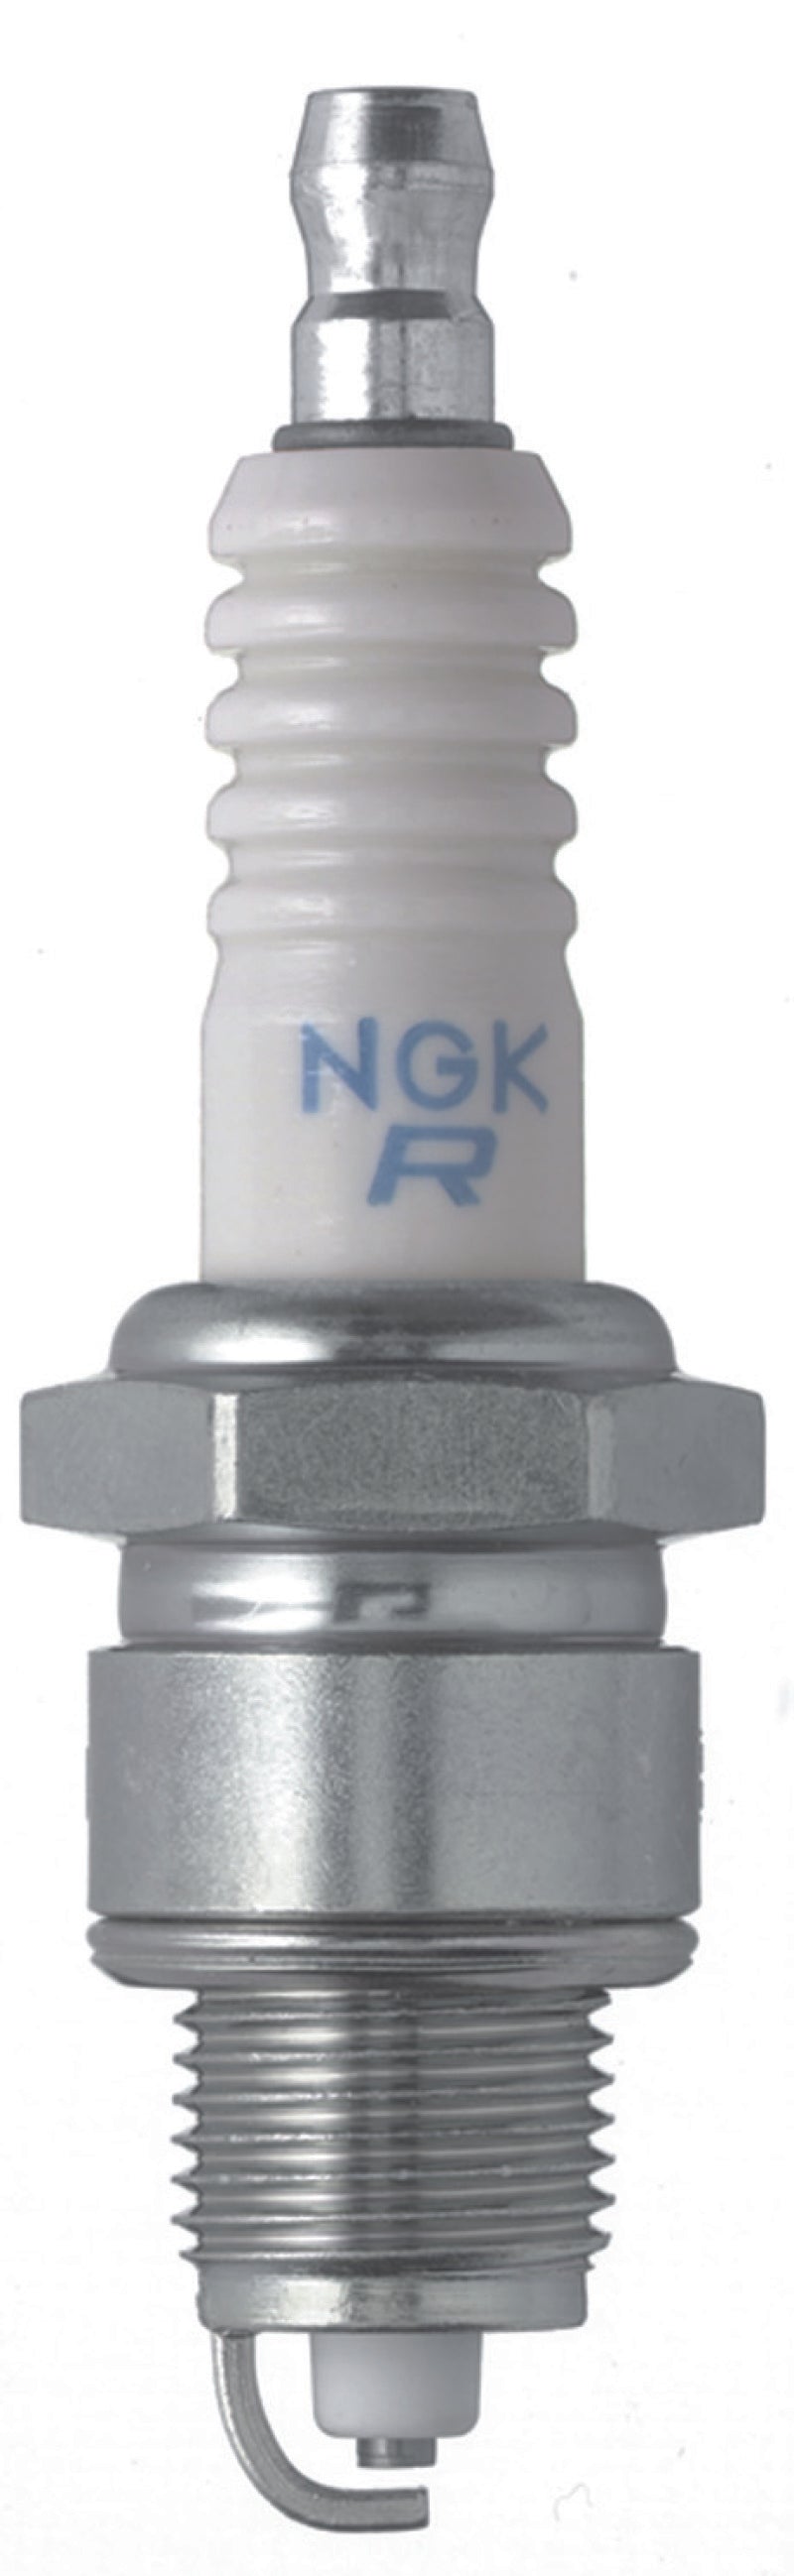 NGK Copper Core Spark Plug Box of 4 (BPR7HS) -  Shop now at Performance Car Parts